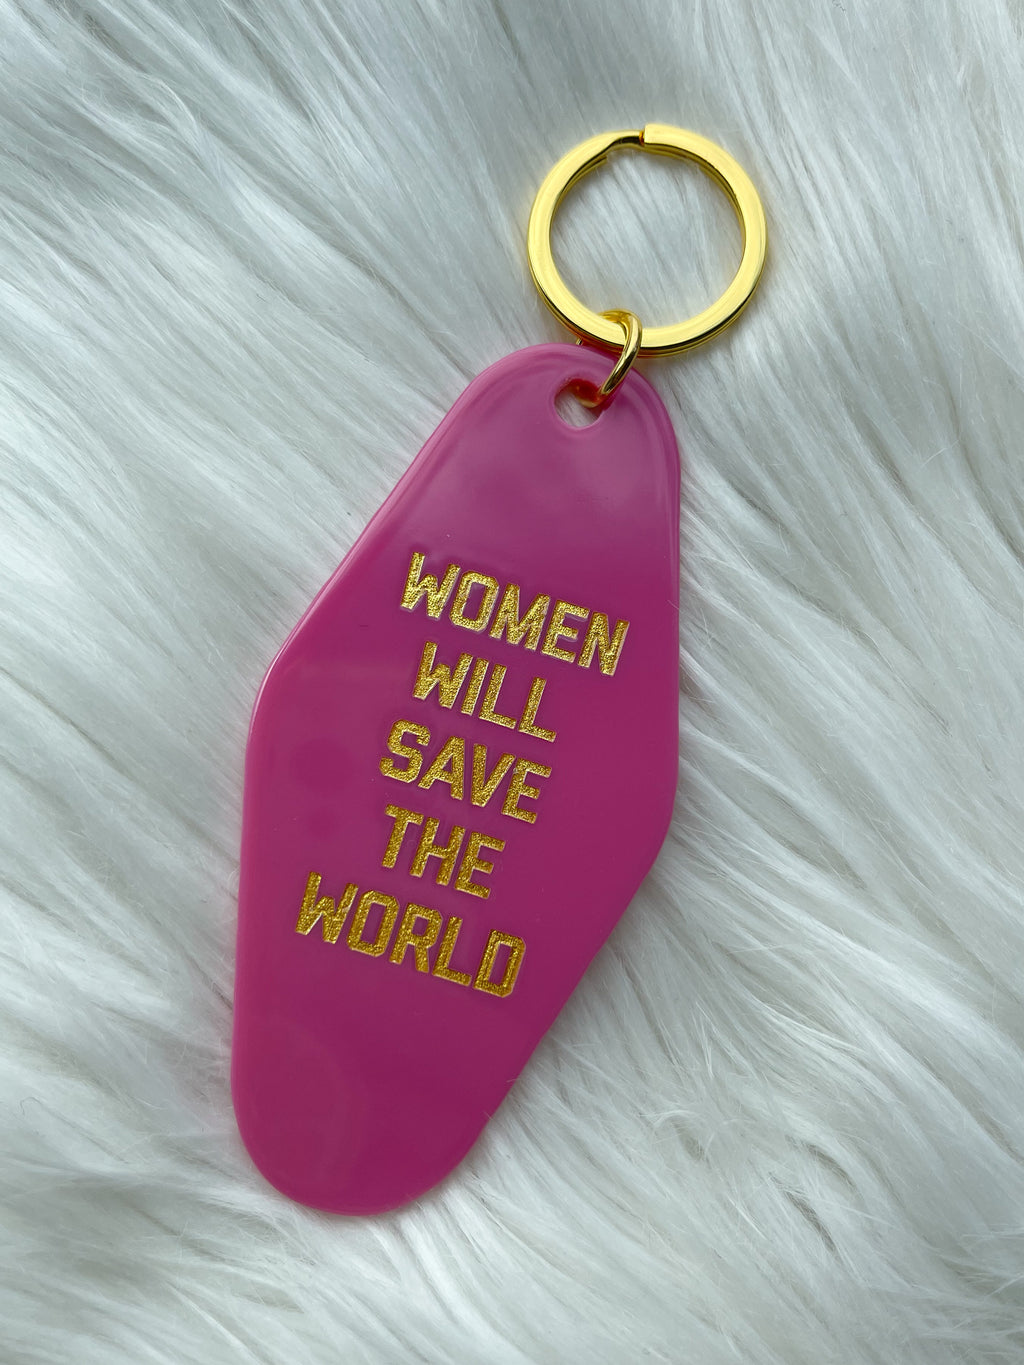 Women Will Save The World Motel Keychain